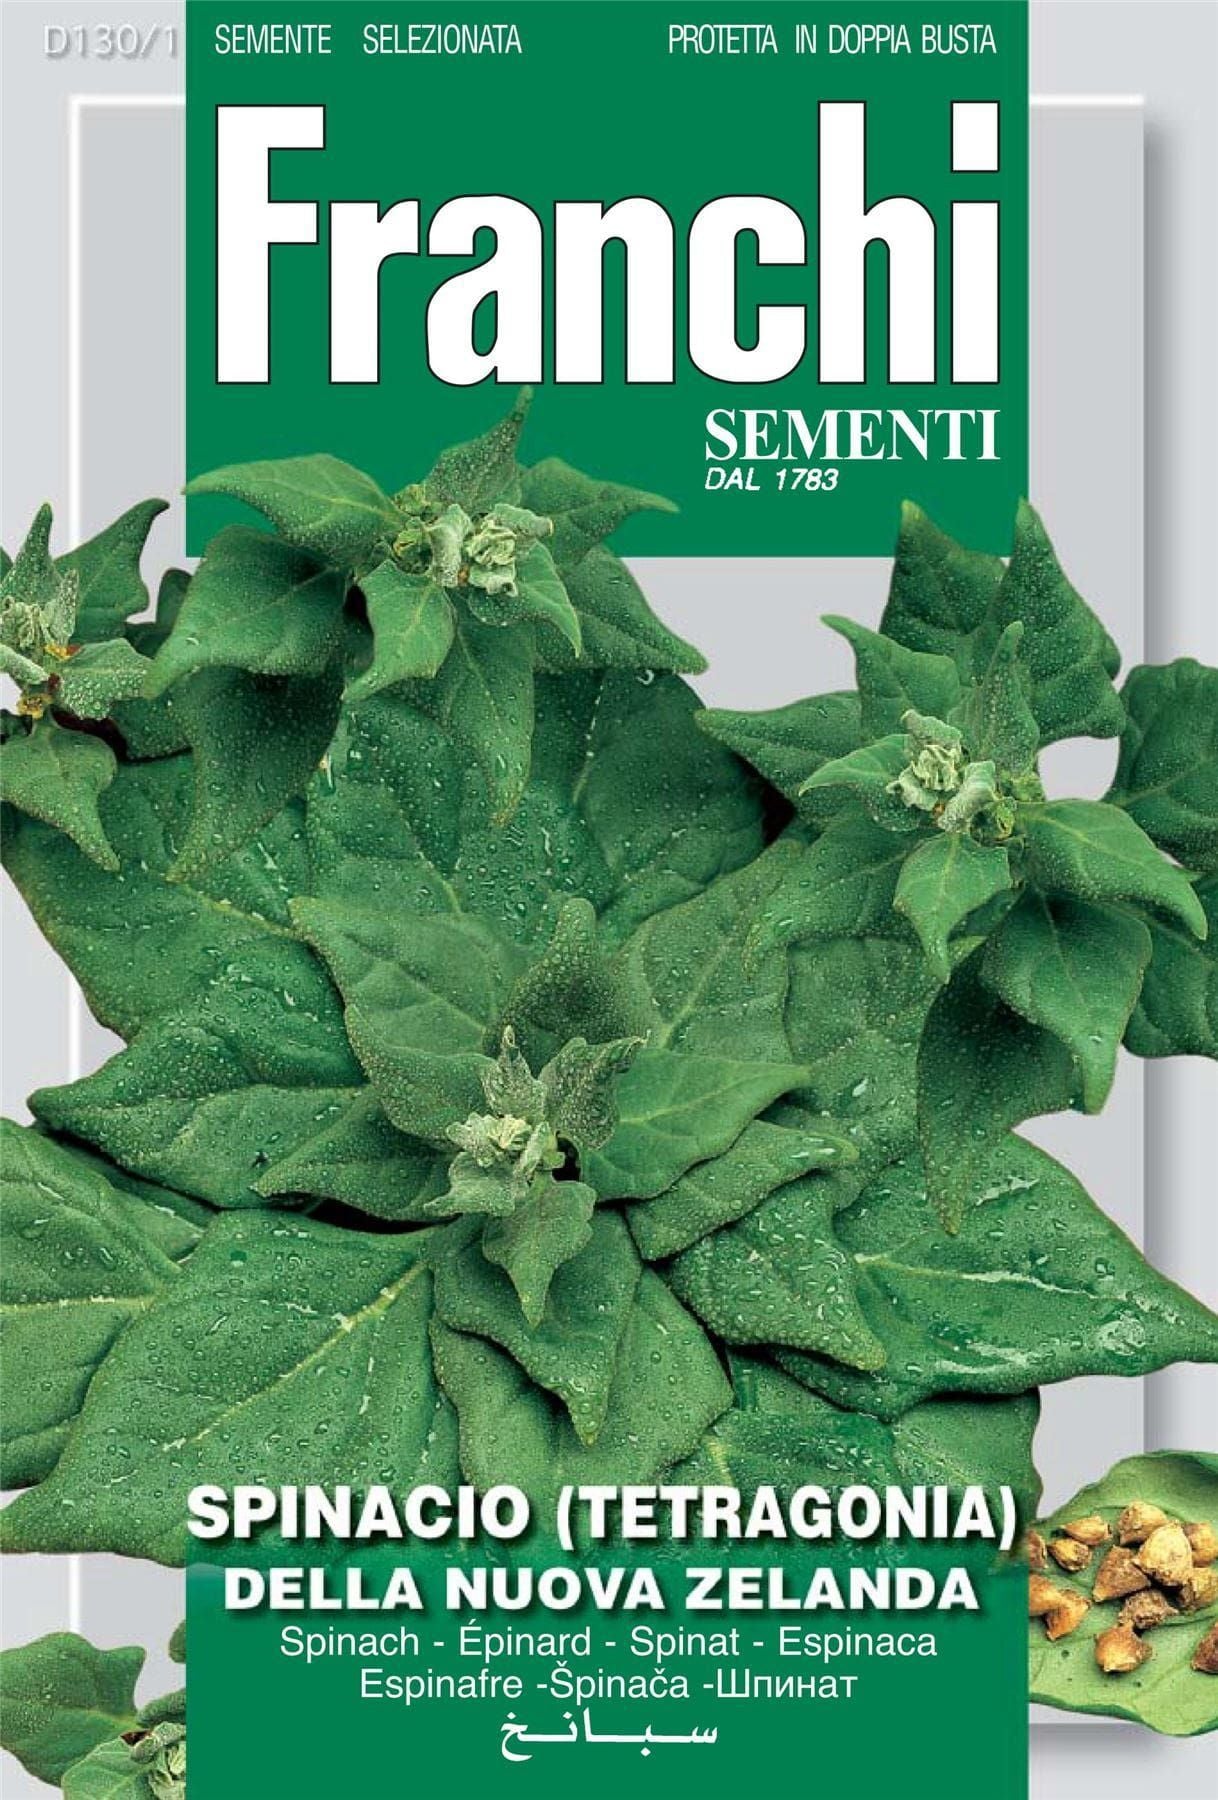 Franchi Seeds of Italy Tetragonia Della Nuova Zelanda Nz Seeds